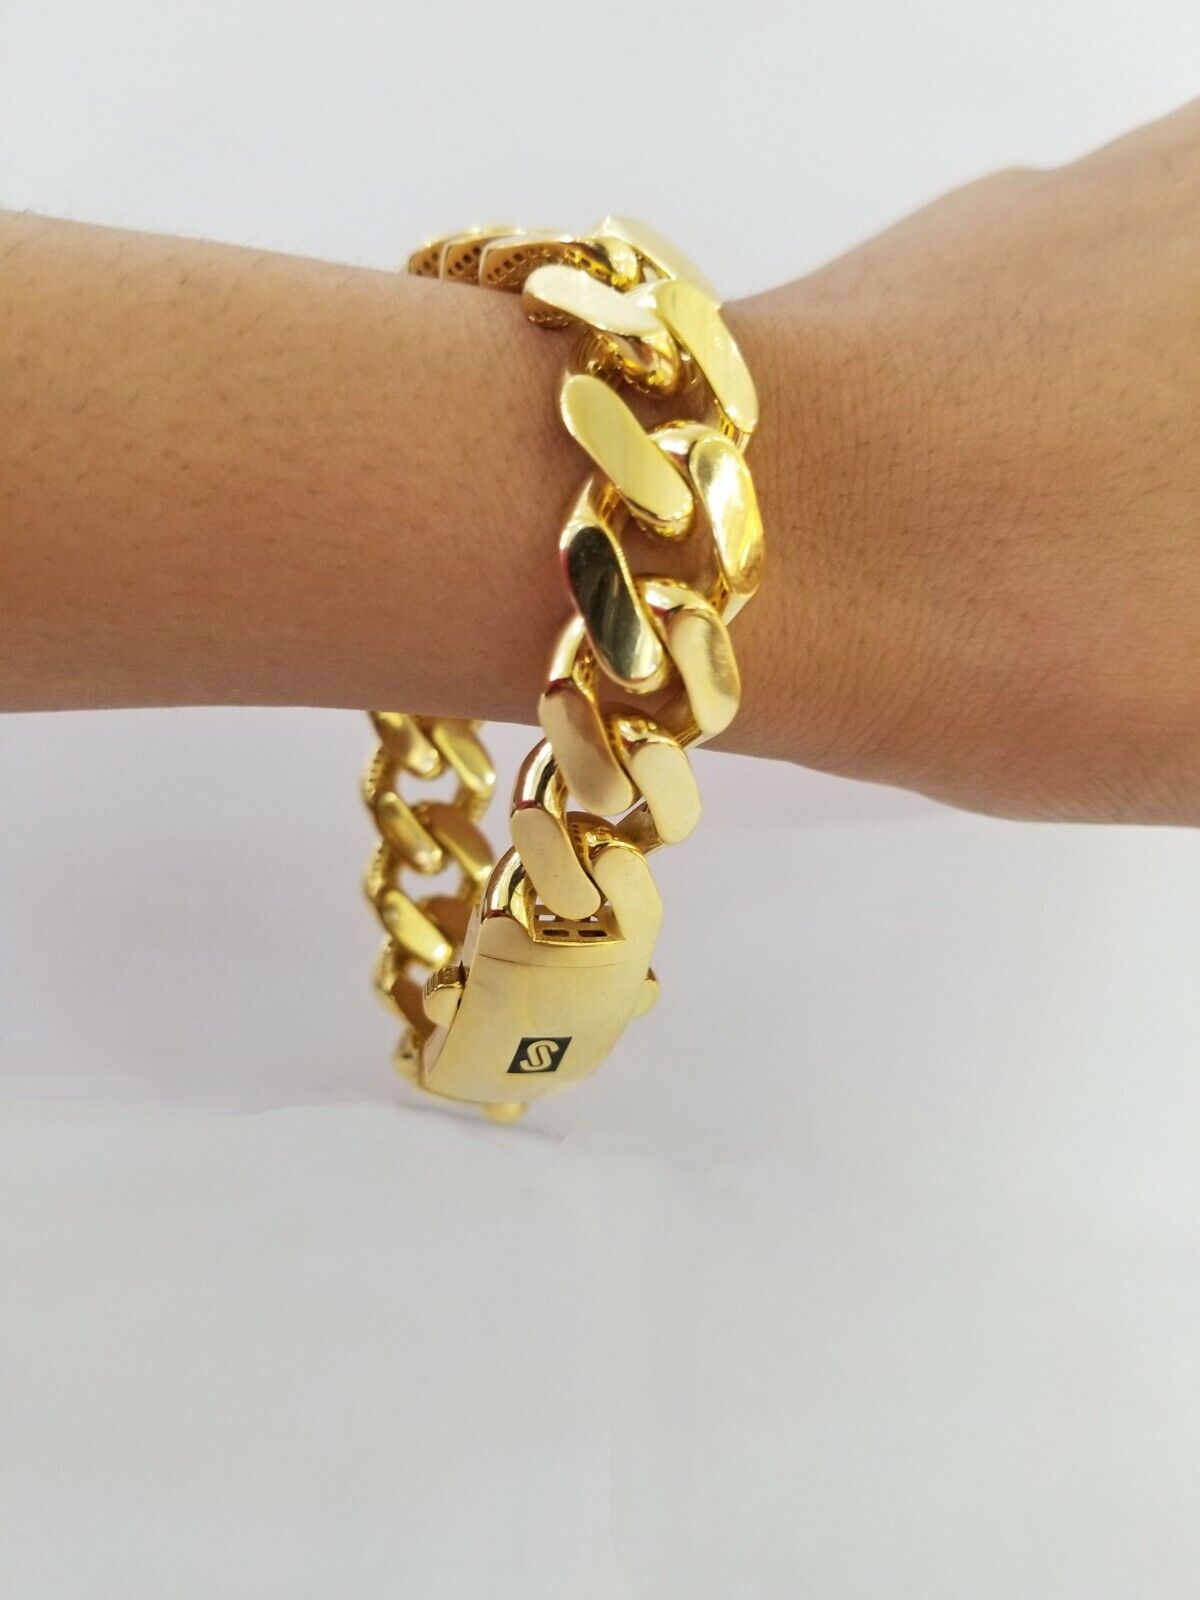 10K Yellow Gold Monaco Bracelet 9 inch 15mm  Cuban link hand chain Real 10kt